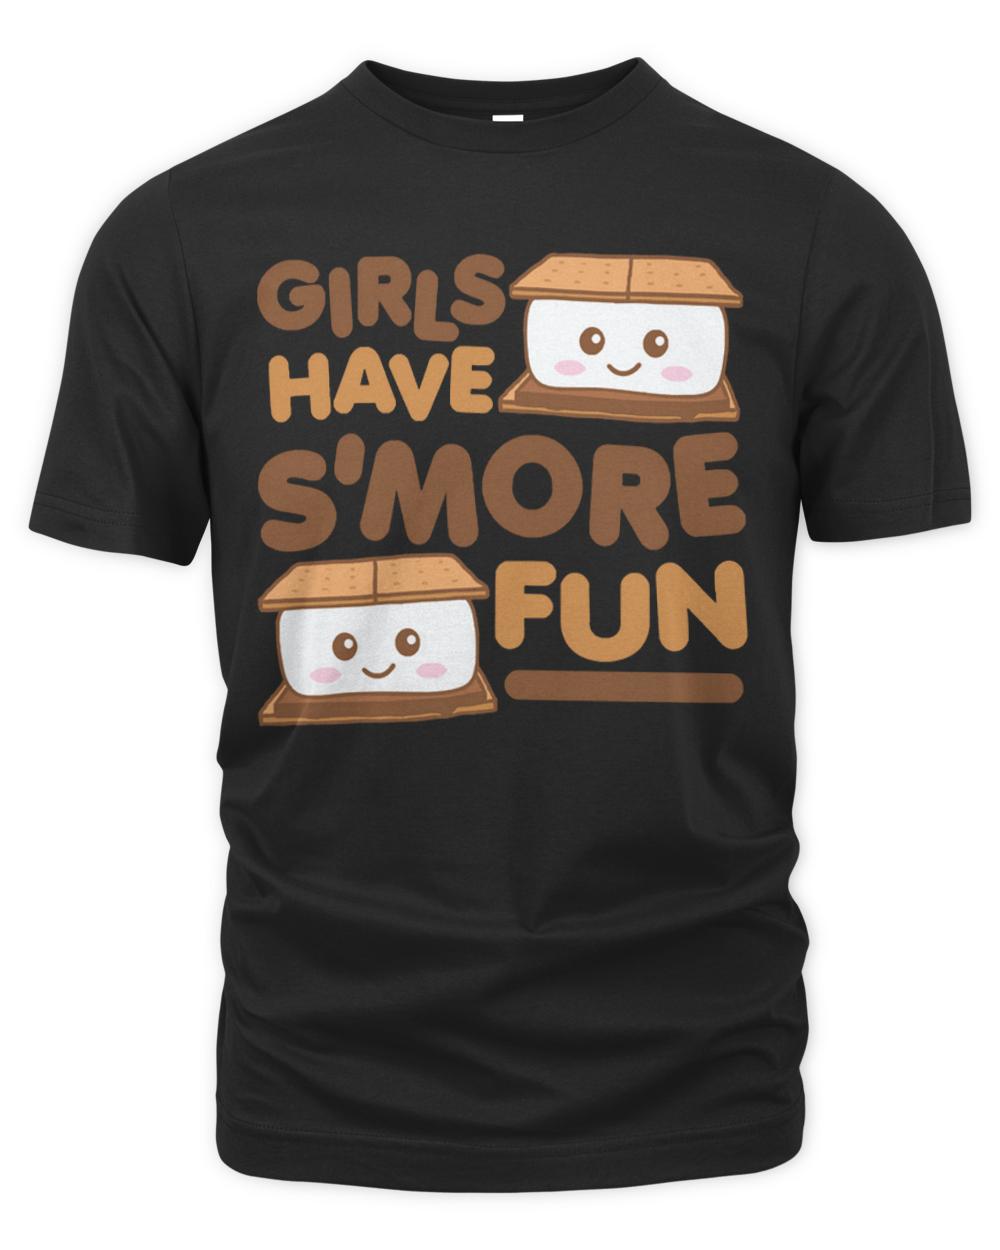 Smores Lover T-ShirtGirls Have Smore Fun Camping S'more Camper Glamping T-Shirt_by DetourShirts_